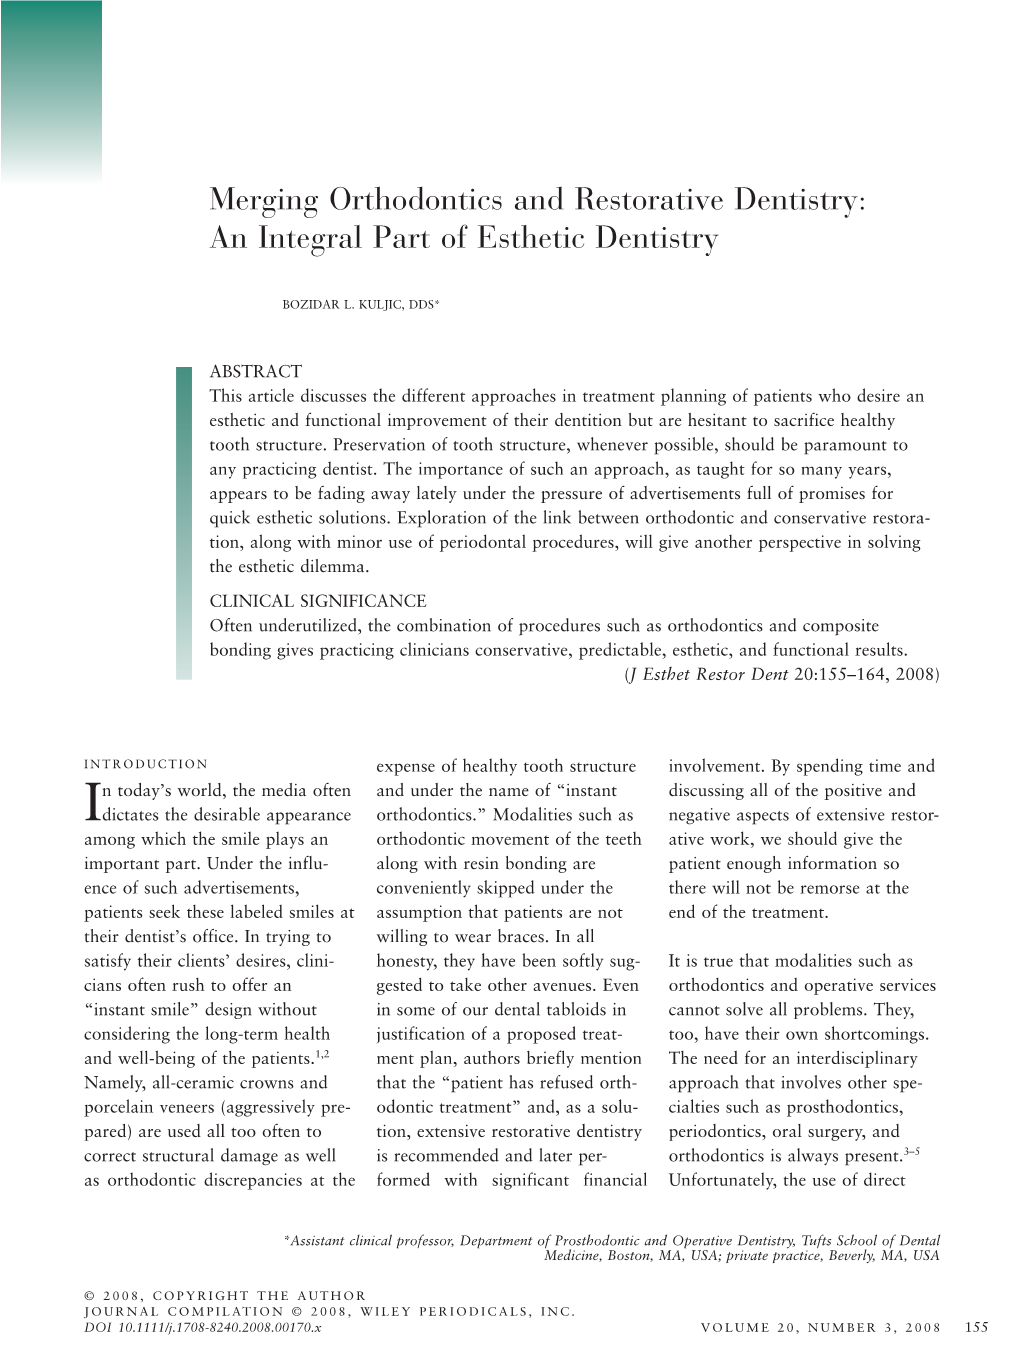 Merging Orthodontics and Restorative Dentistry: an Integral Part of Esthetic Dentistry